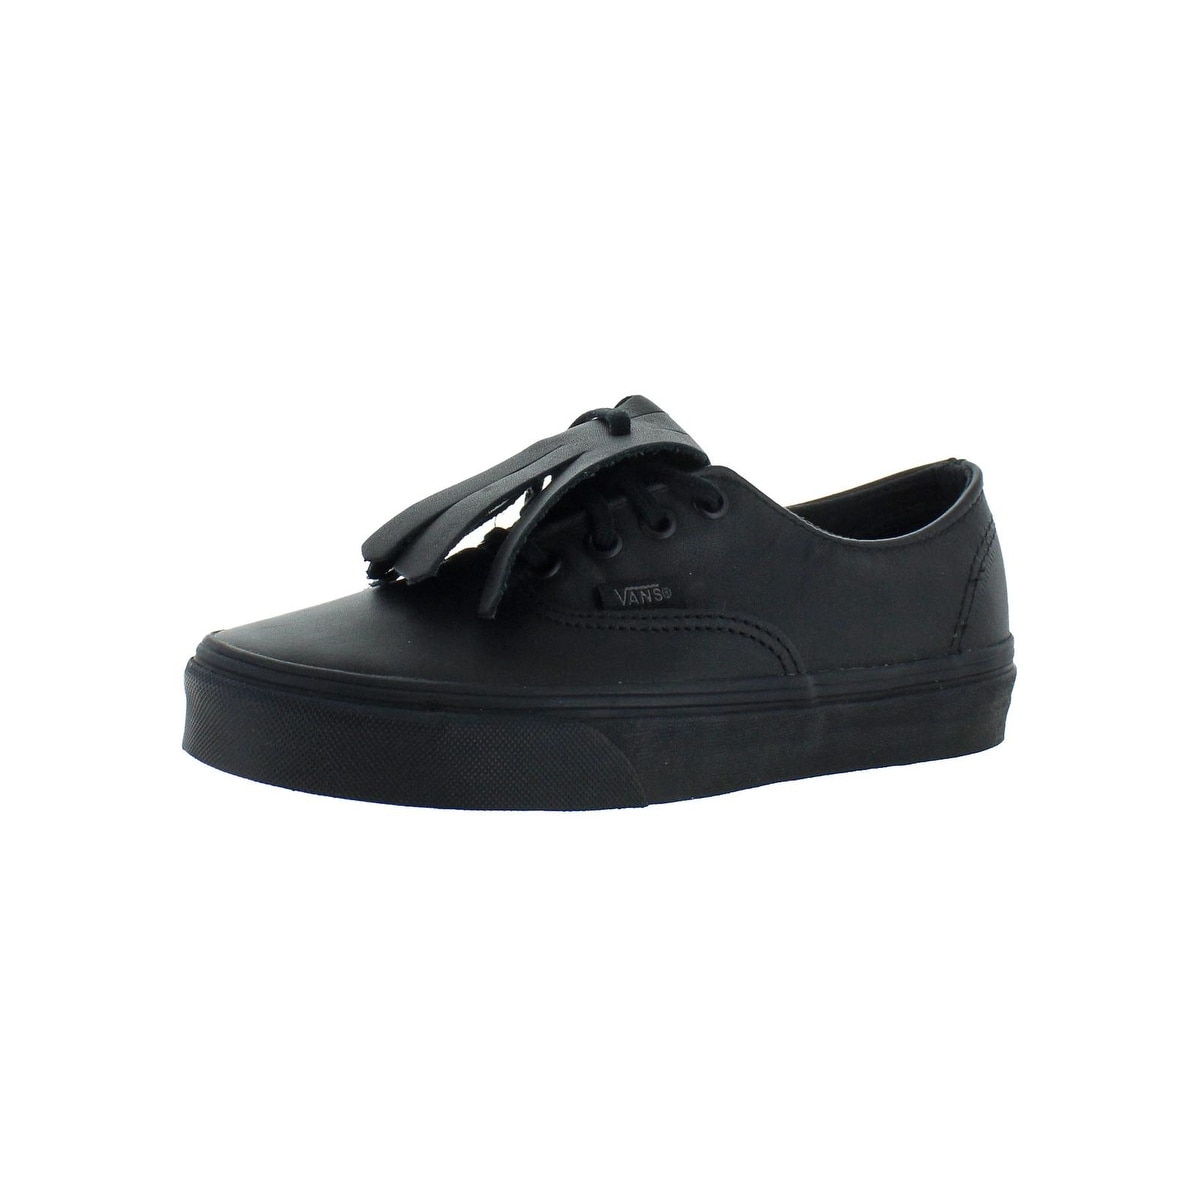 vans authentic black leather low-top womens sneaker